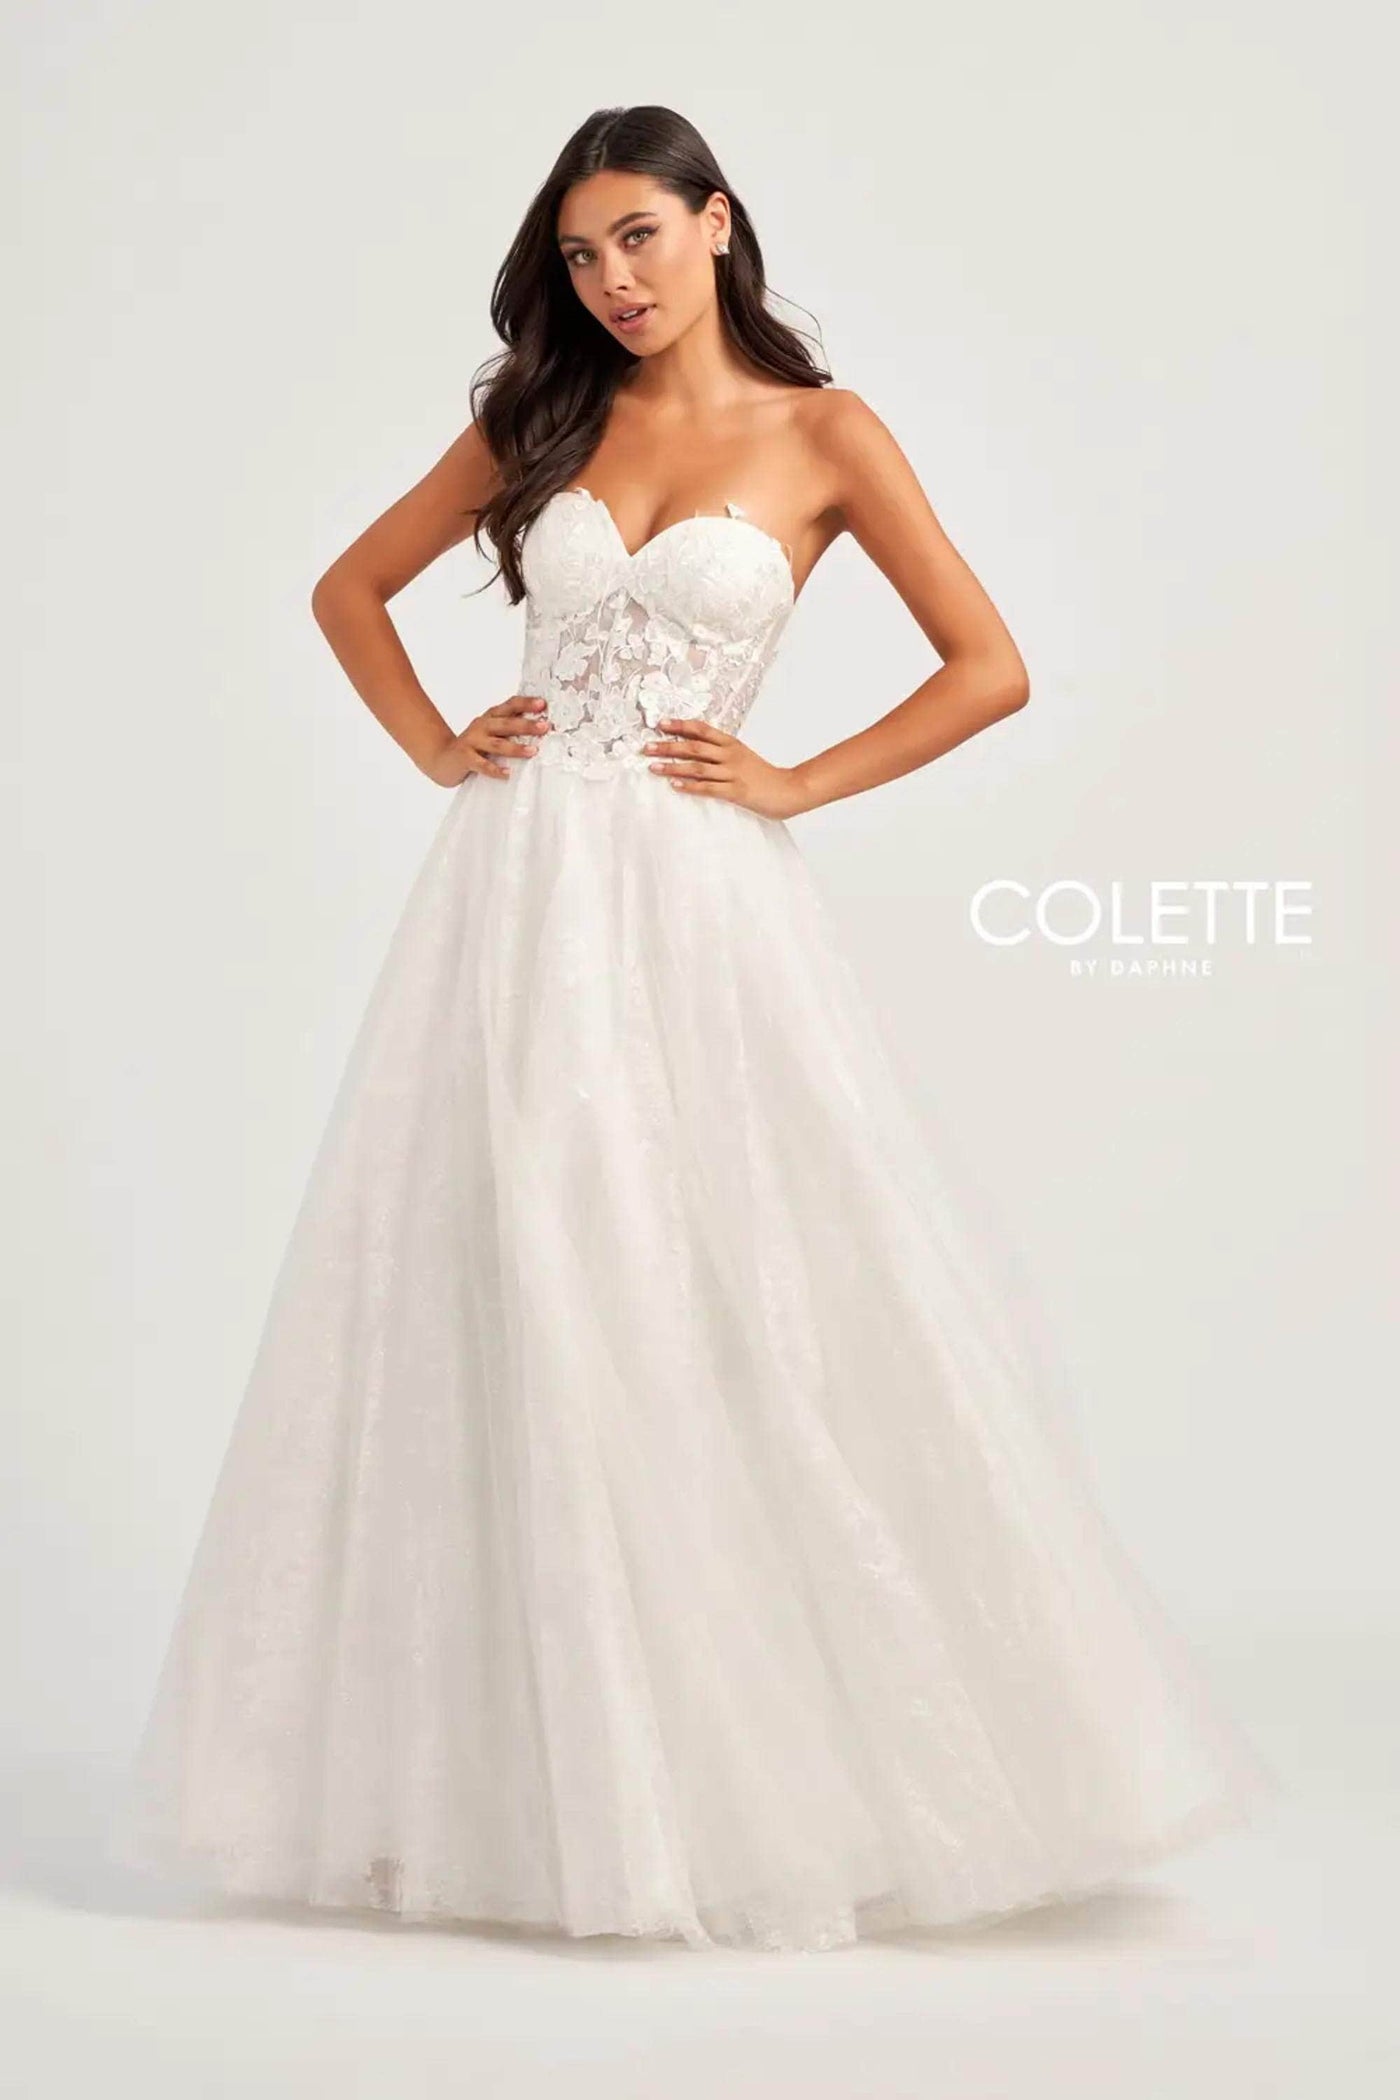 Colette By Daphne CL5153 - Floral Ornate Prom Dress